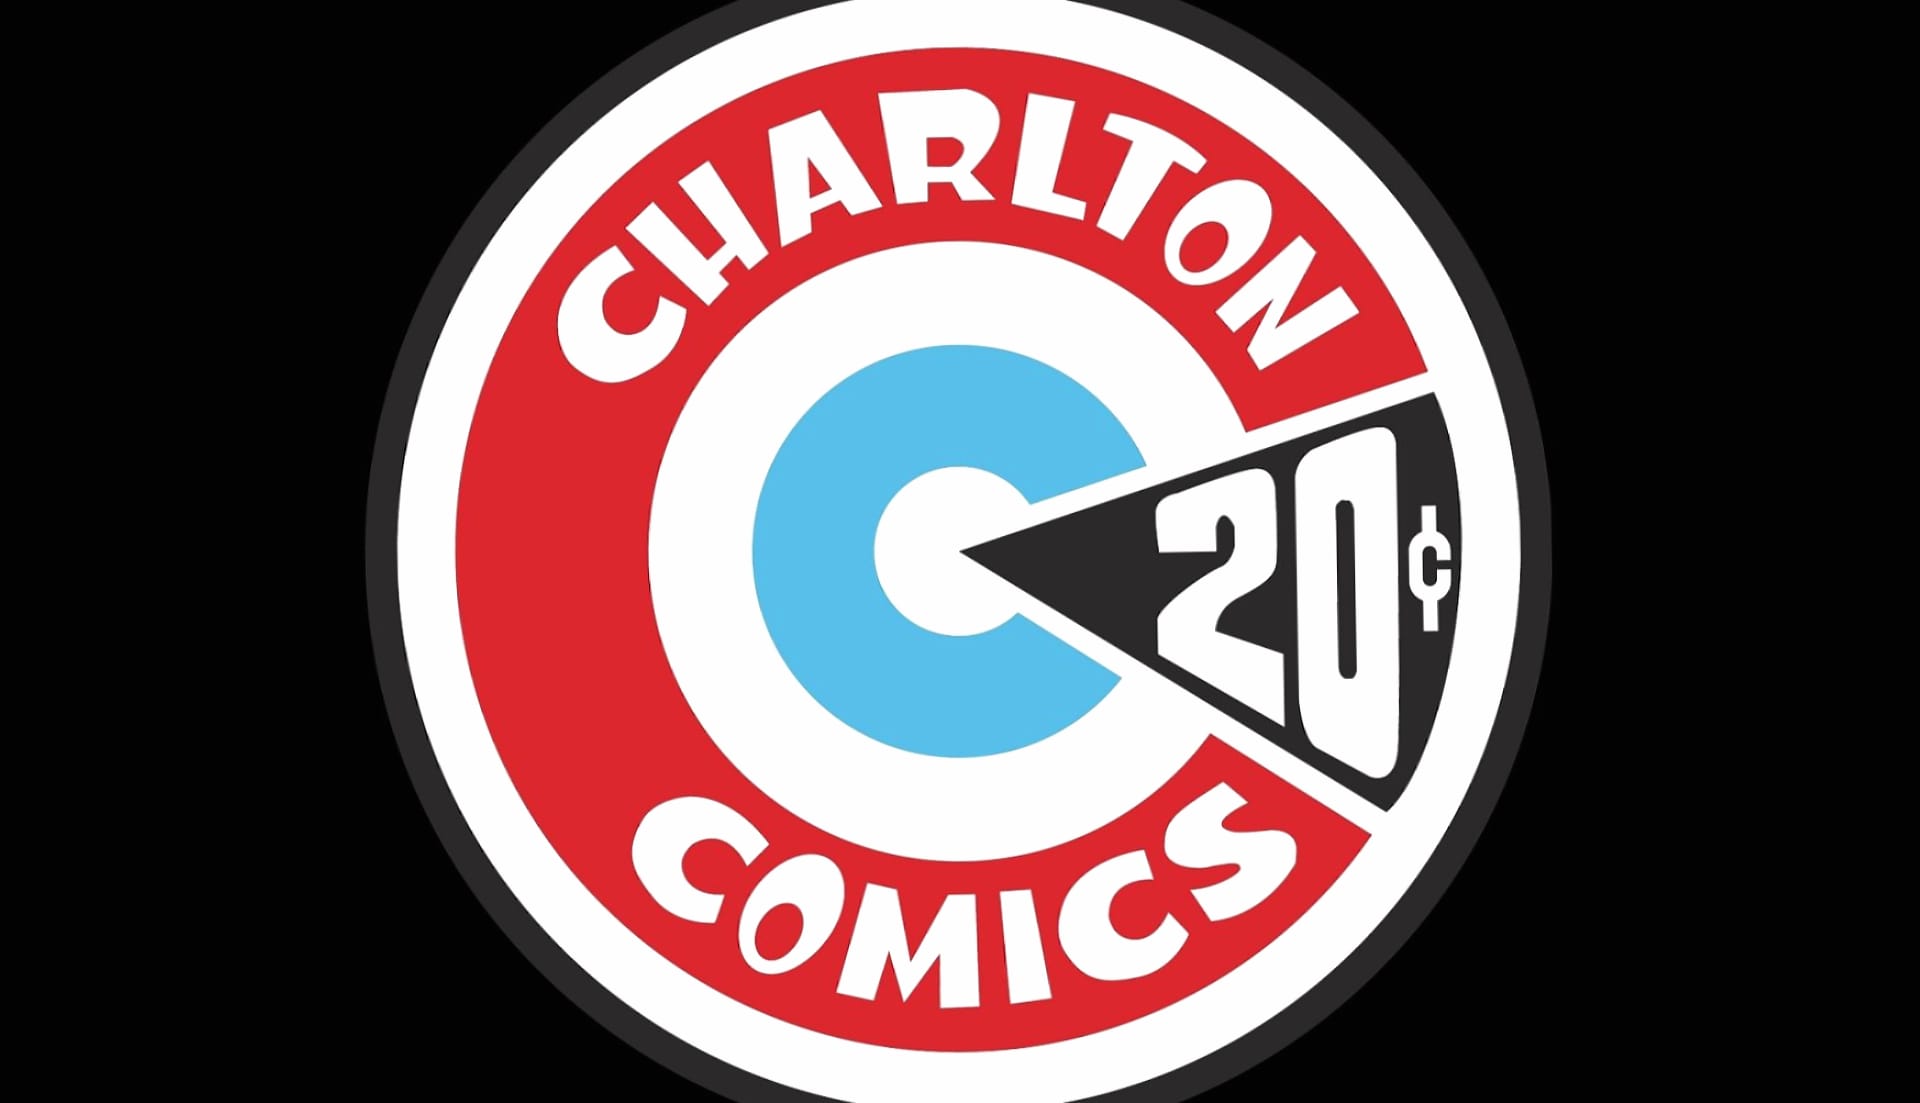 charlton Comics at 1024 x 1024 iPad size wallpapers HD quality